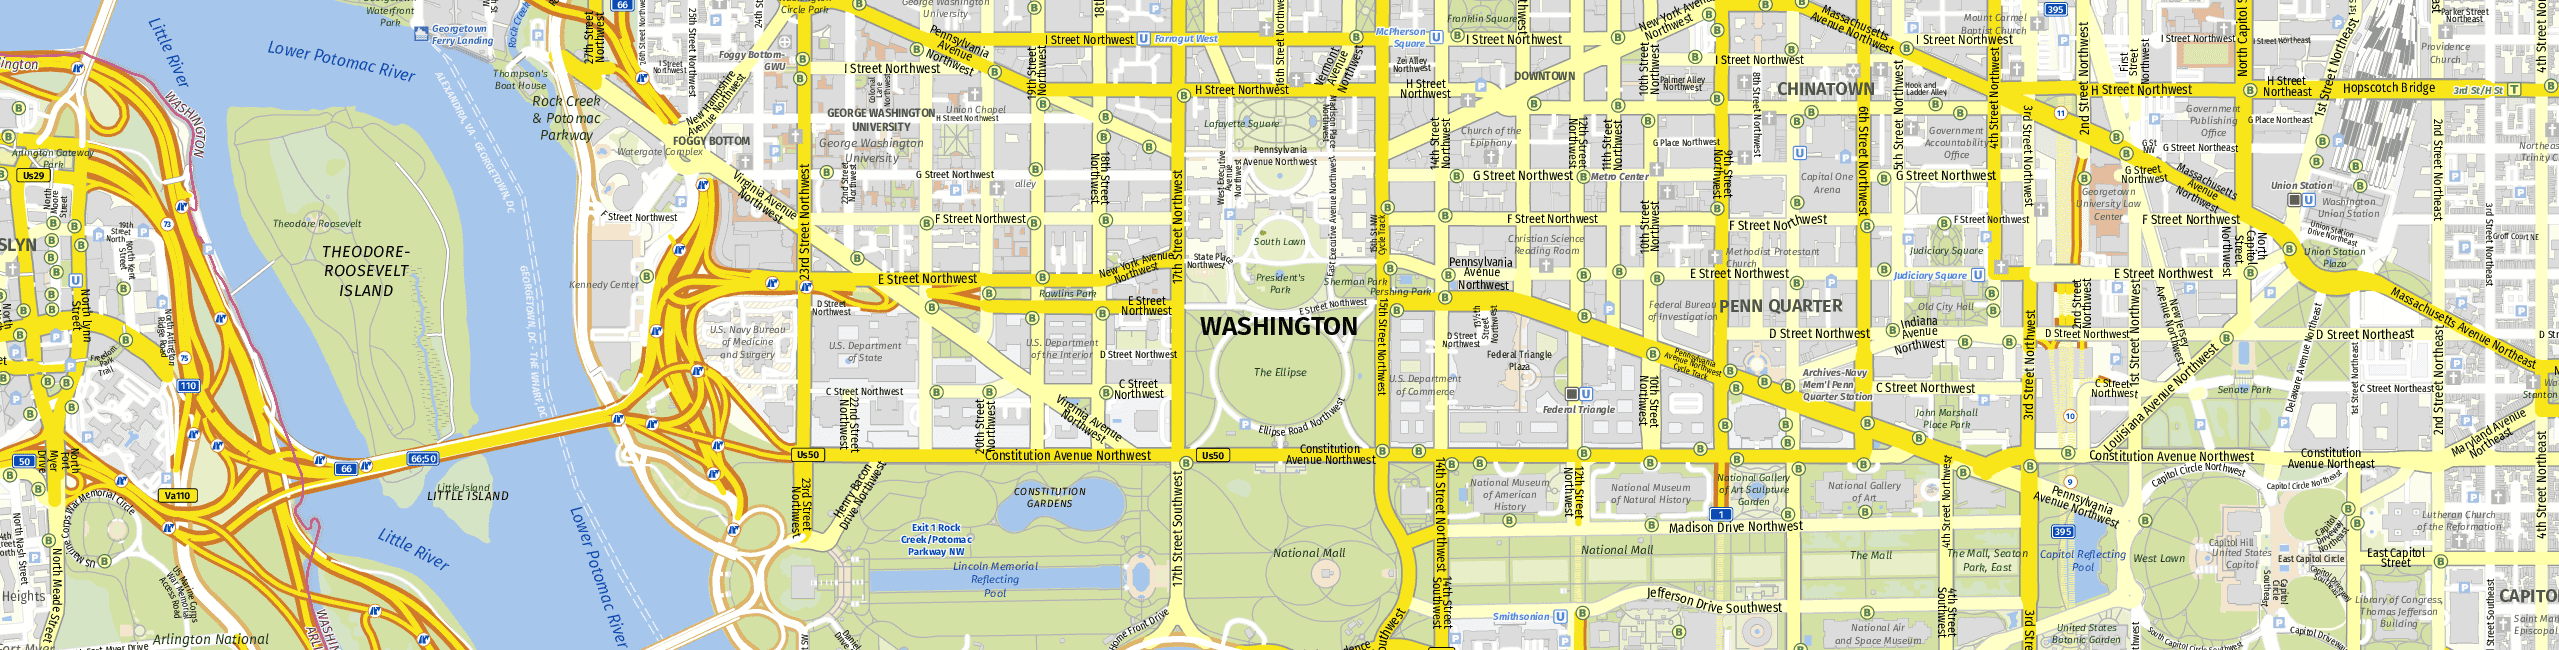 Stadtplan Washington, D.C. zum Downloaden.